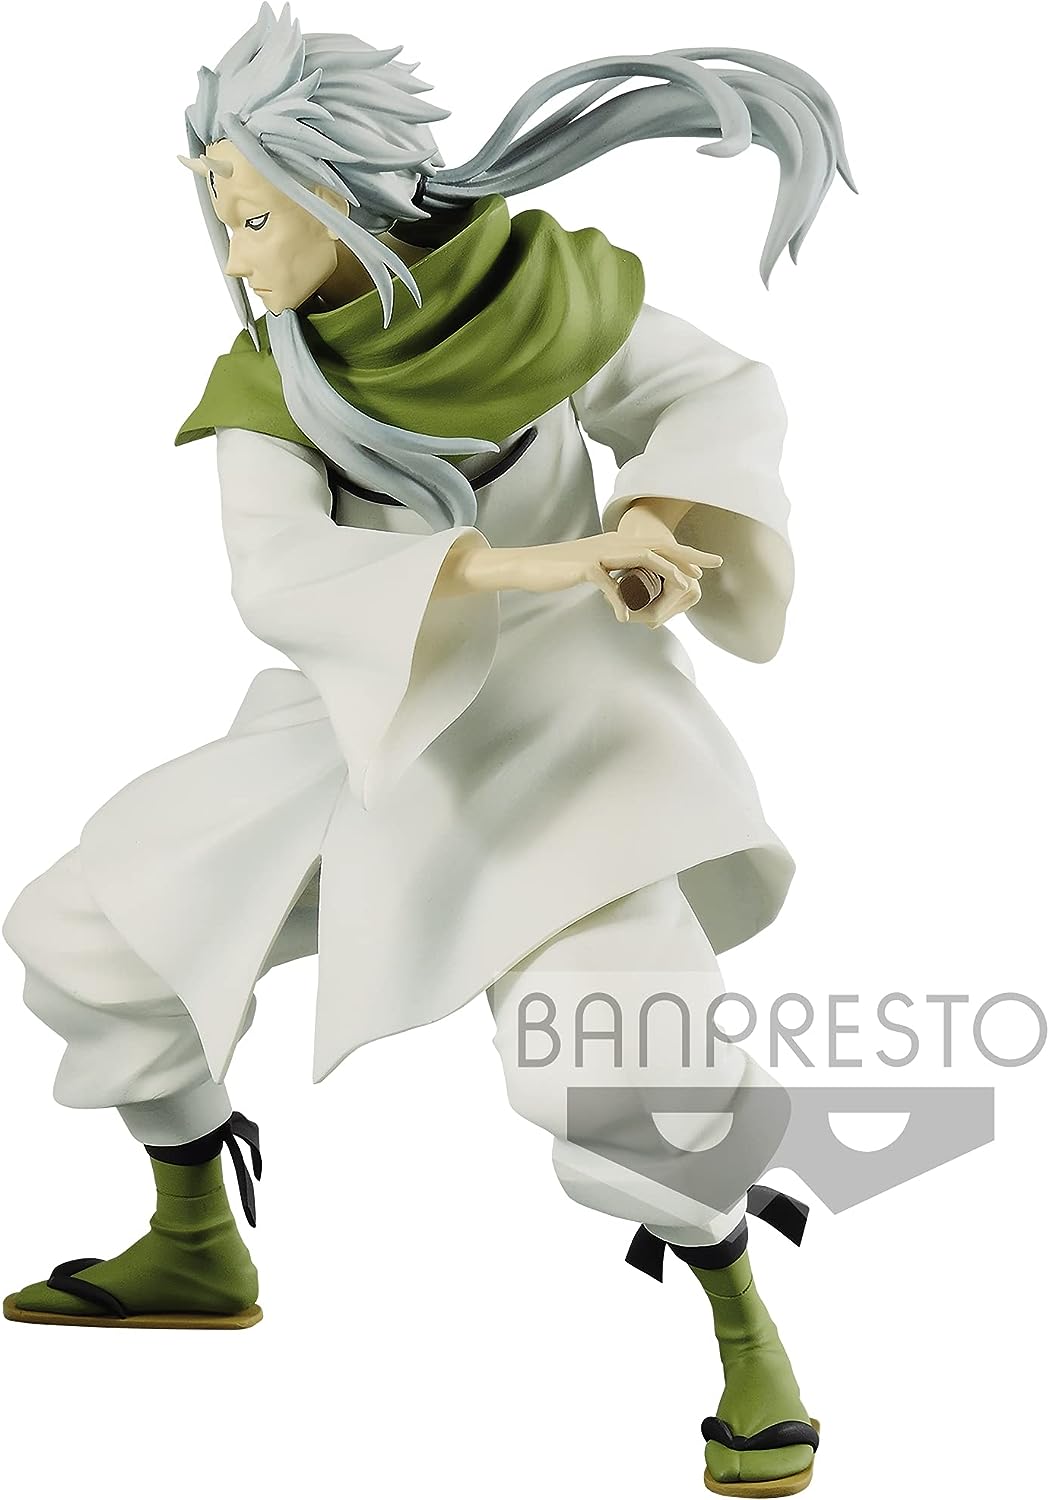 Banpresto - That Time I Got Reincarnated As Slimeotherworlder Hakuro Statue